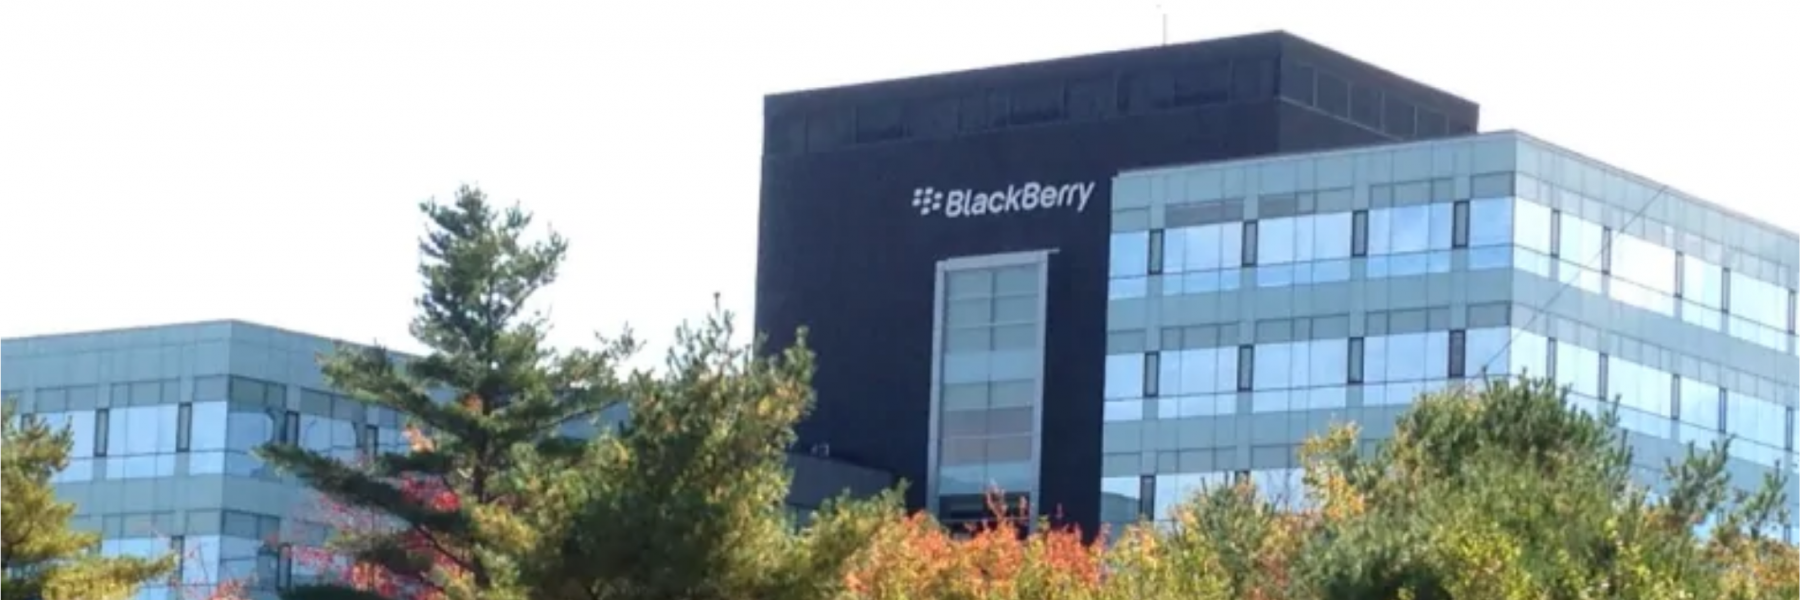 blackberry building